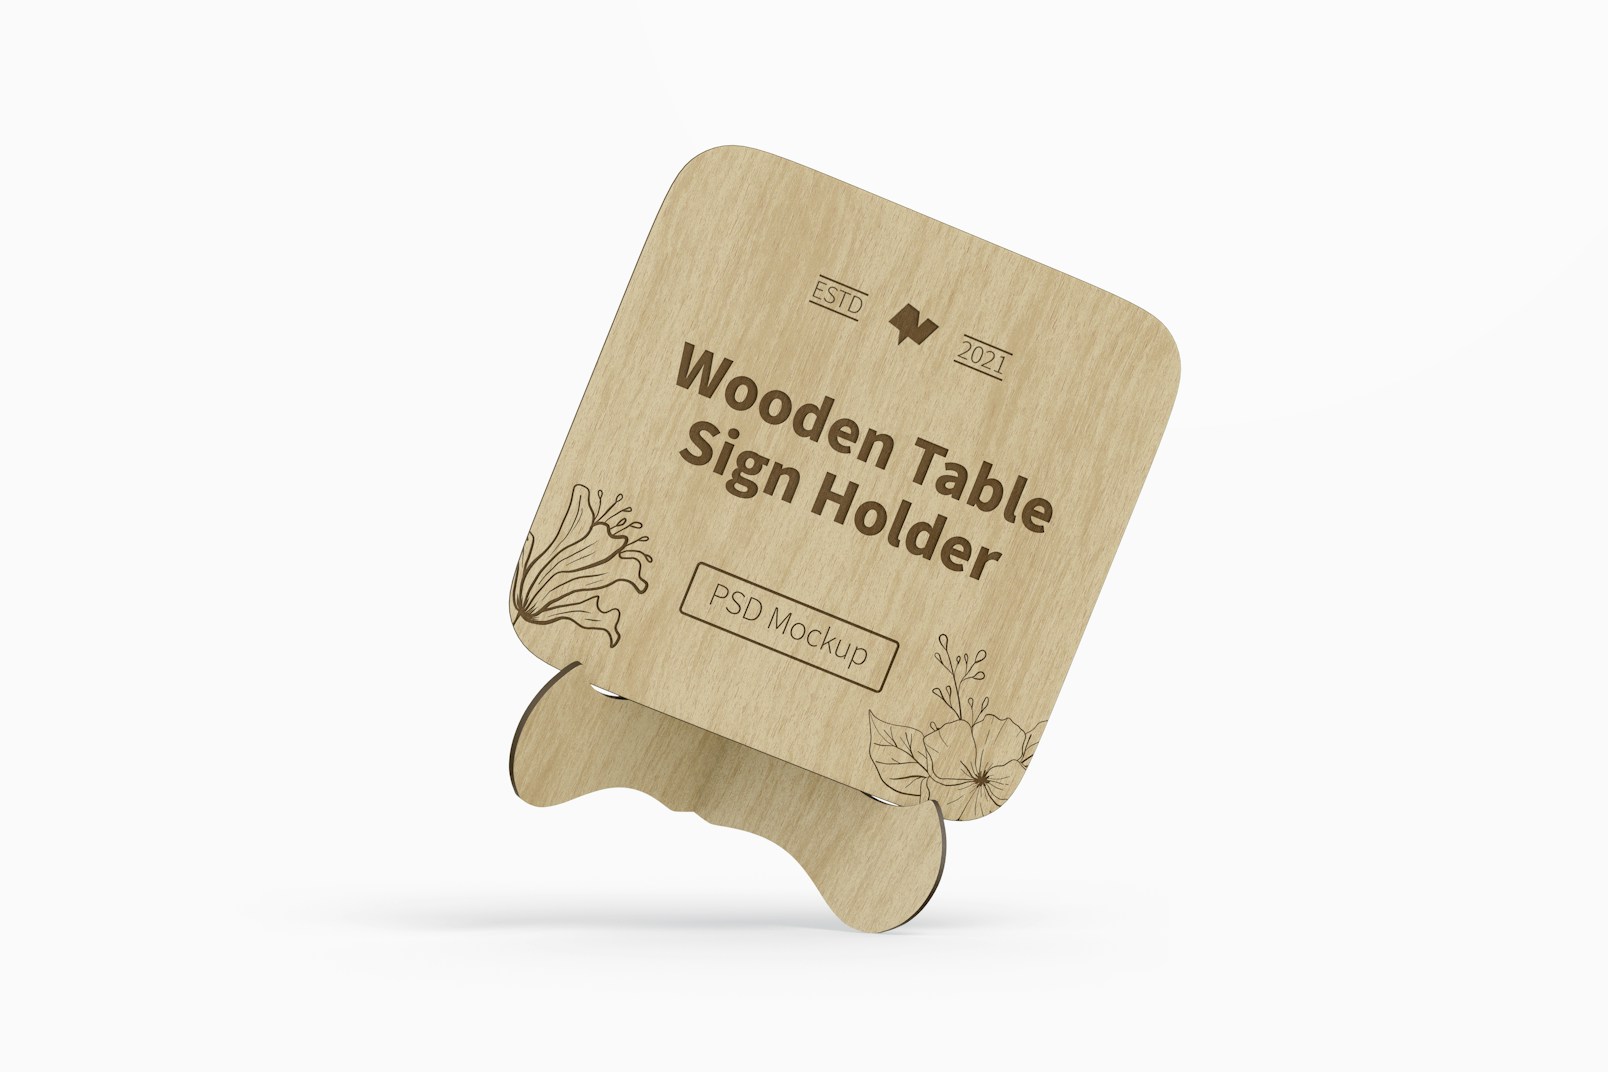 Wooden Table Sign Holder Mockup, Leaned